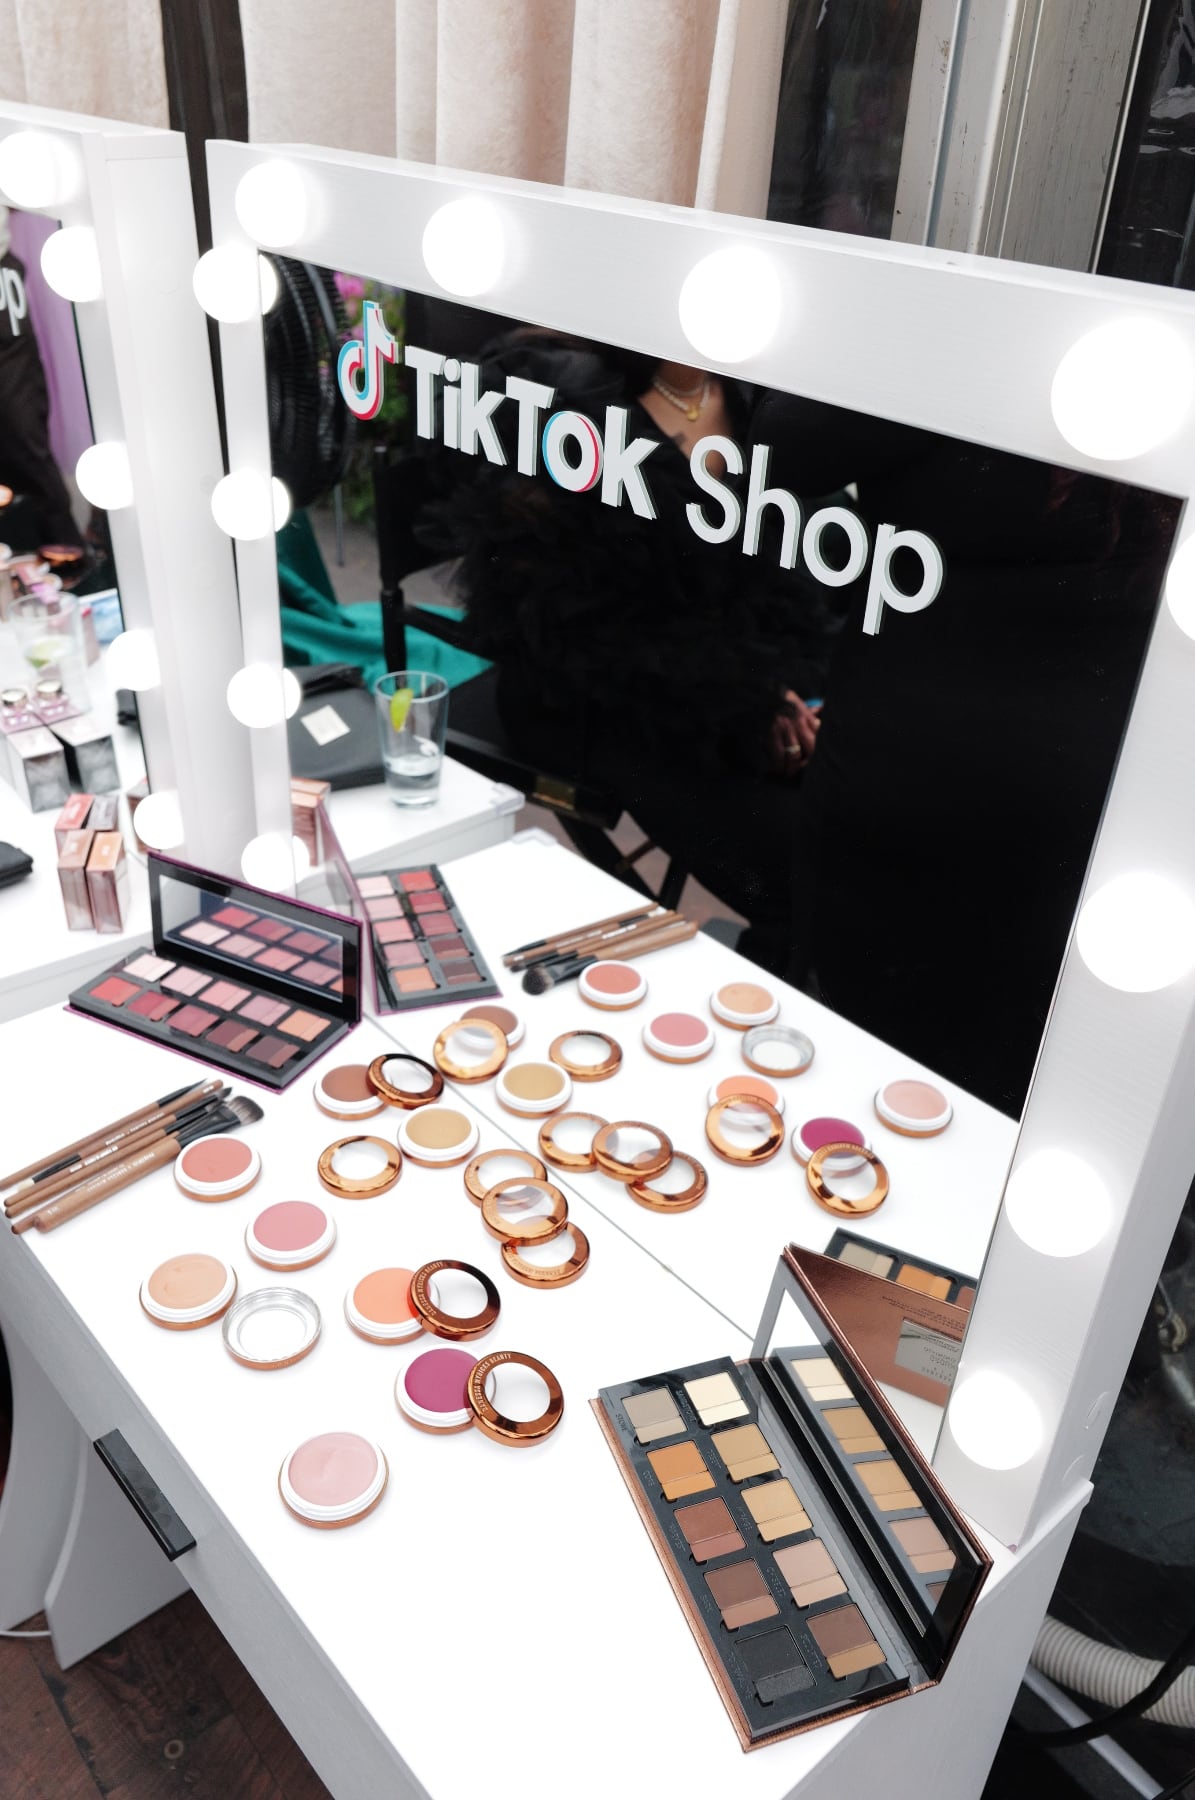 How TikTok Shop Killed the MLM Model